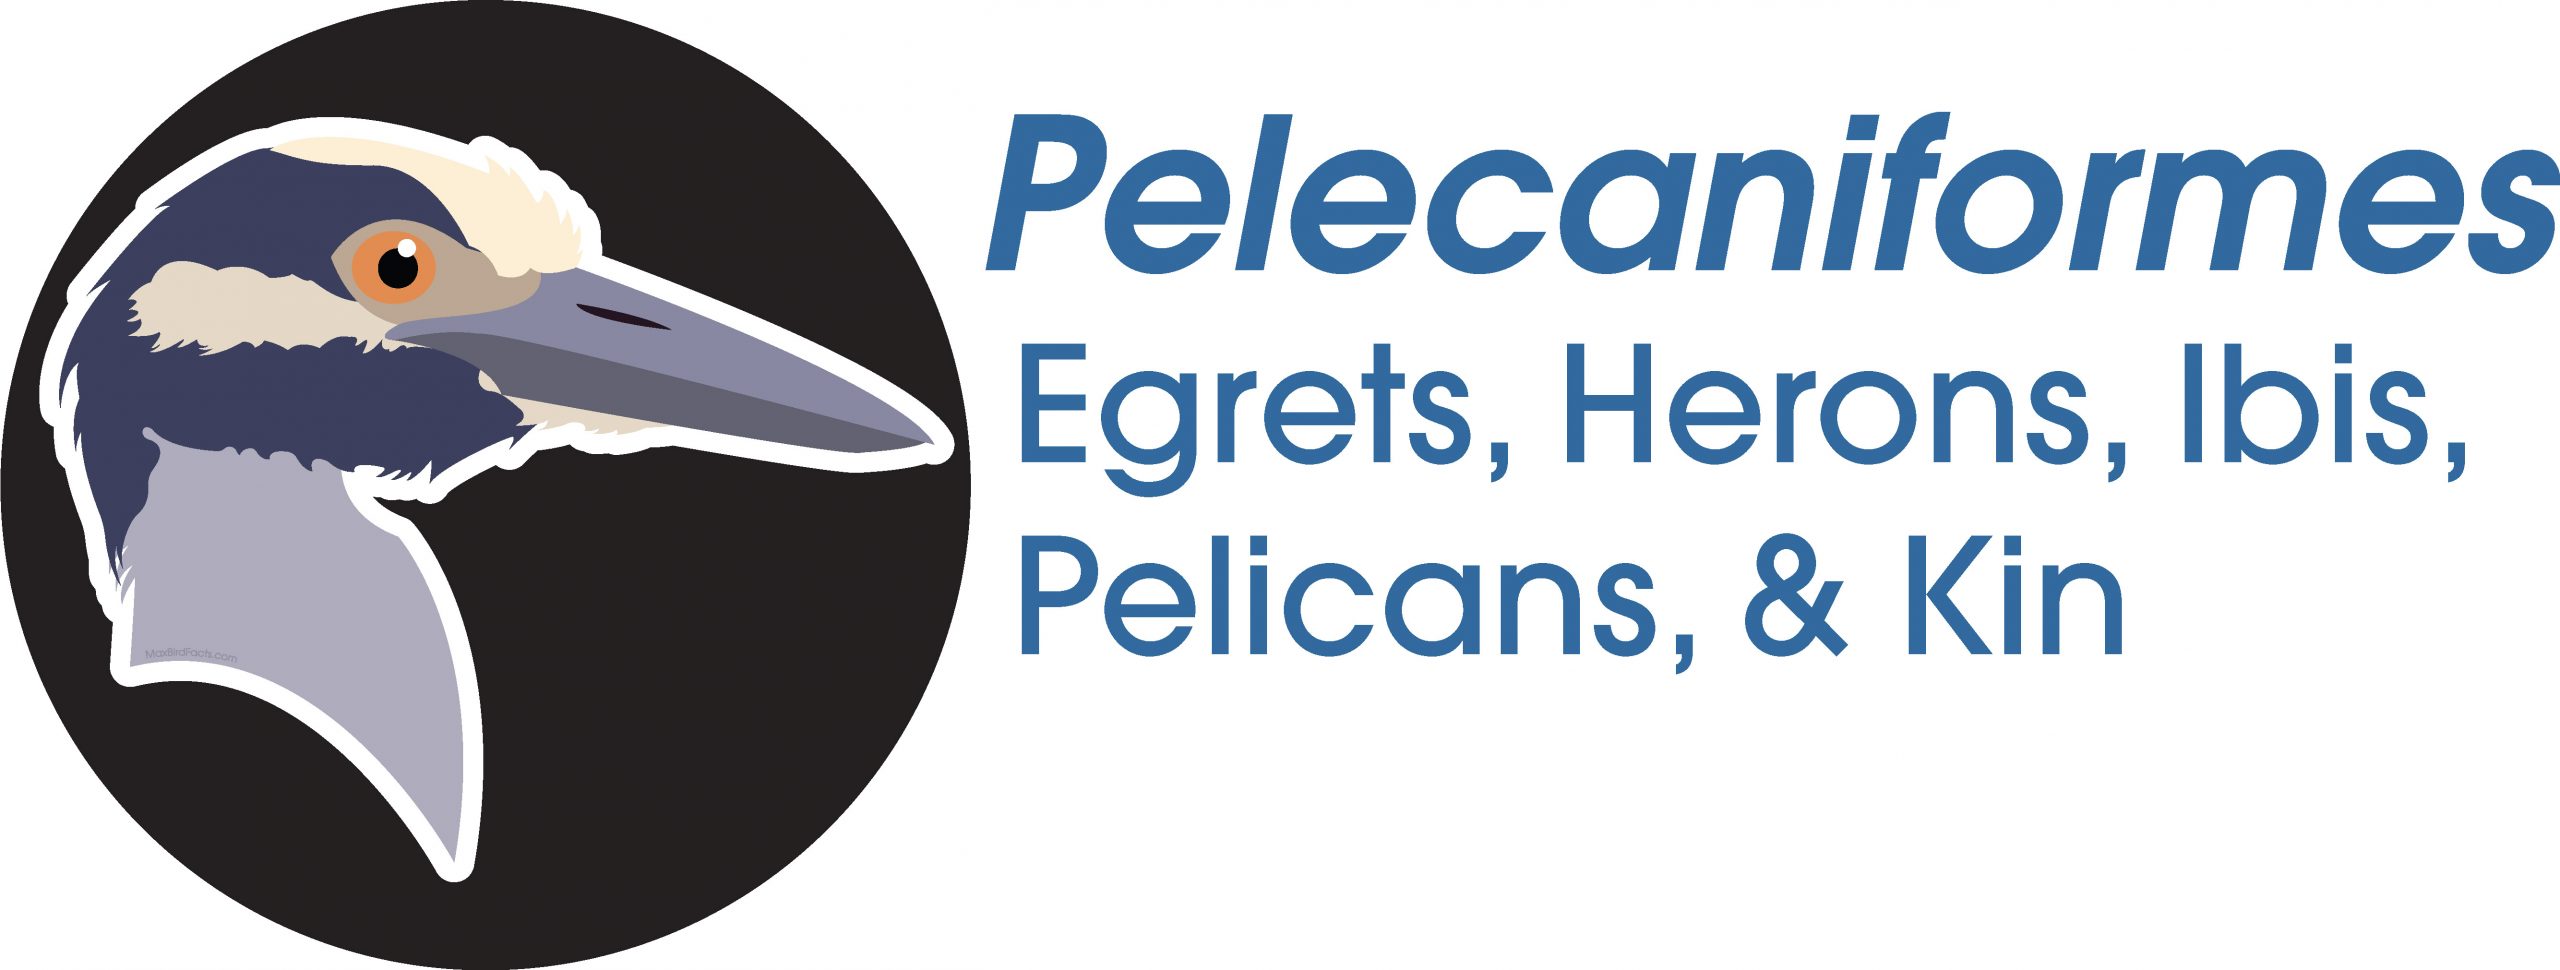 Pelecaniformes
Egrets, Herons, Ibis, Pelicans, and Kin
Yellow-crowned Night-Heron